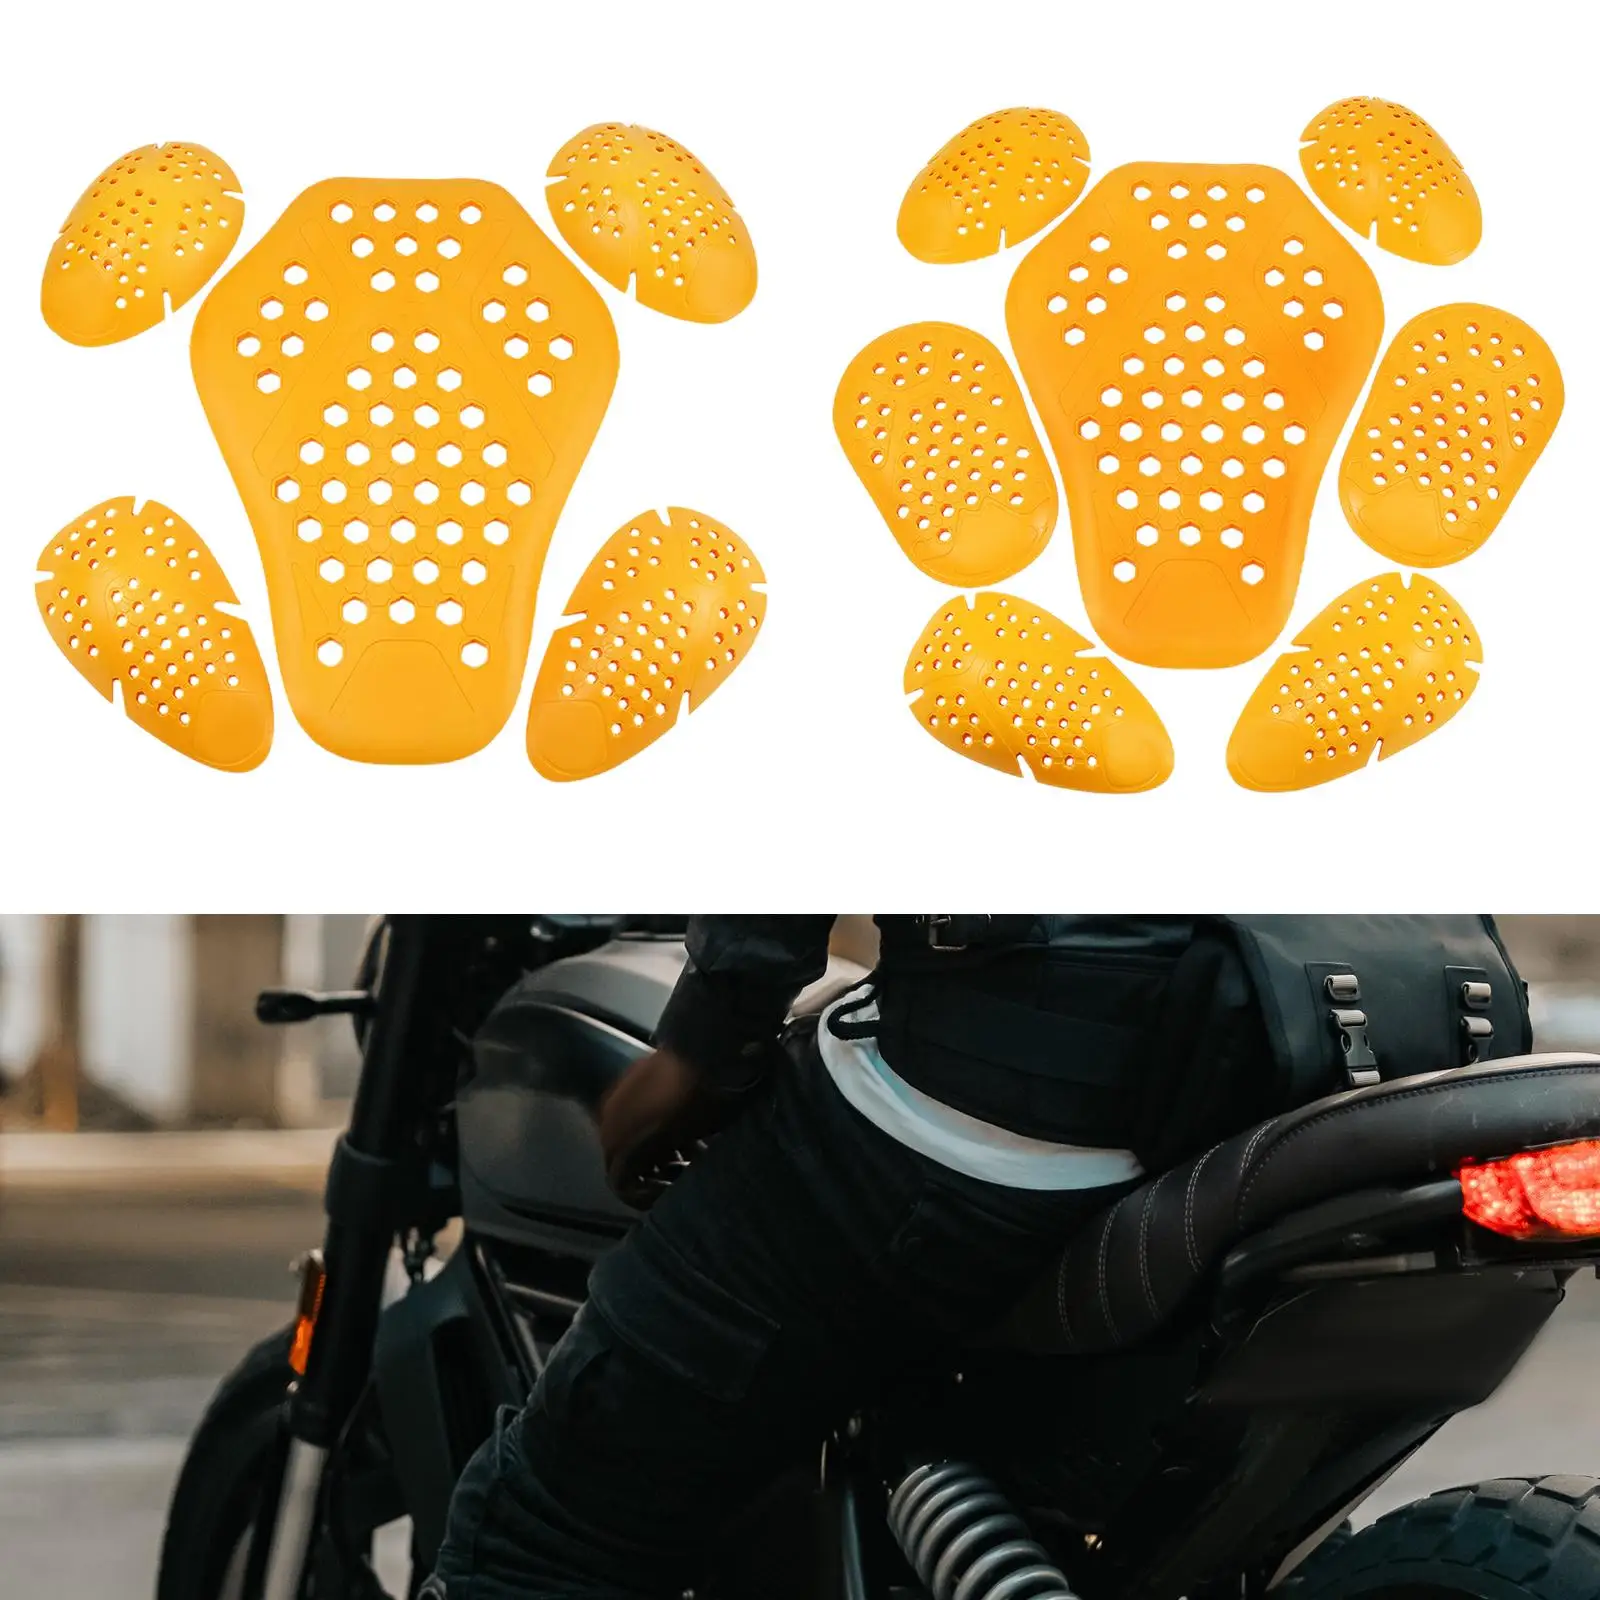 Motorcycle Jacket Armor Moto Accessories Protective Gear Motorbike Dorsal